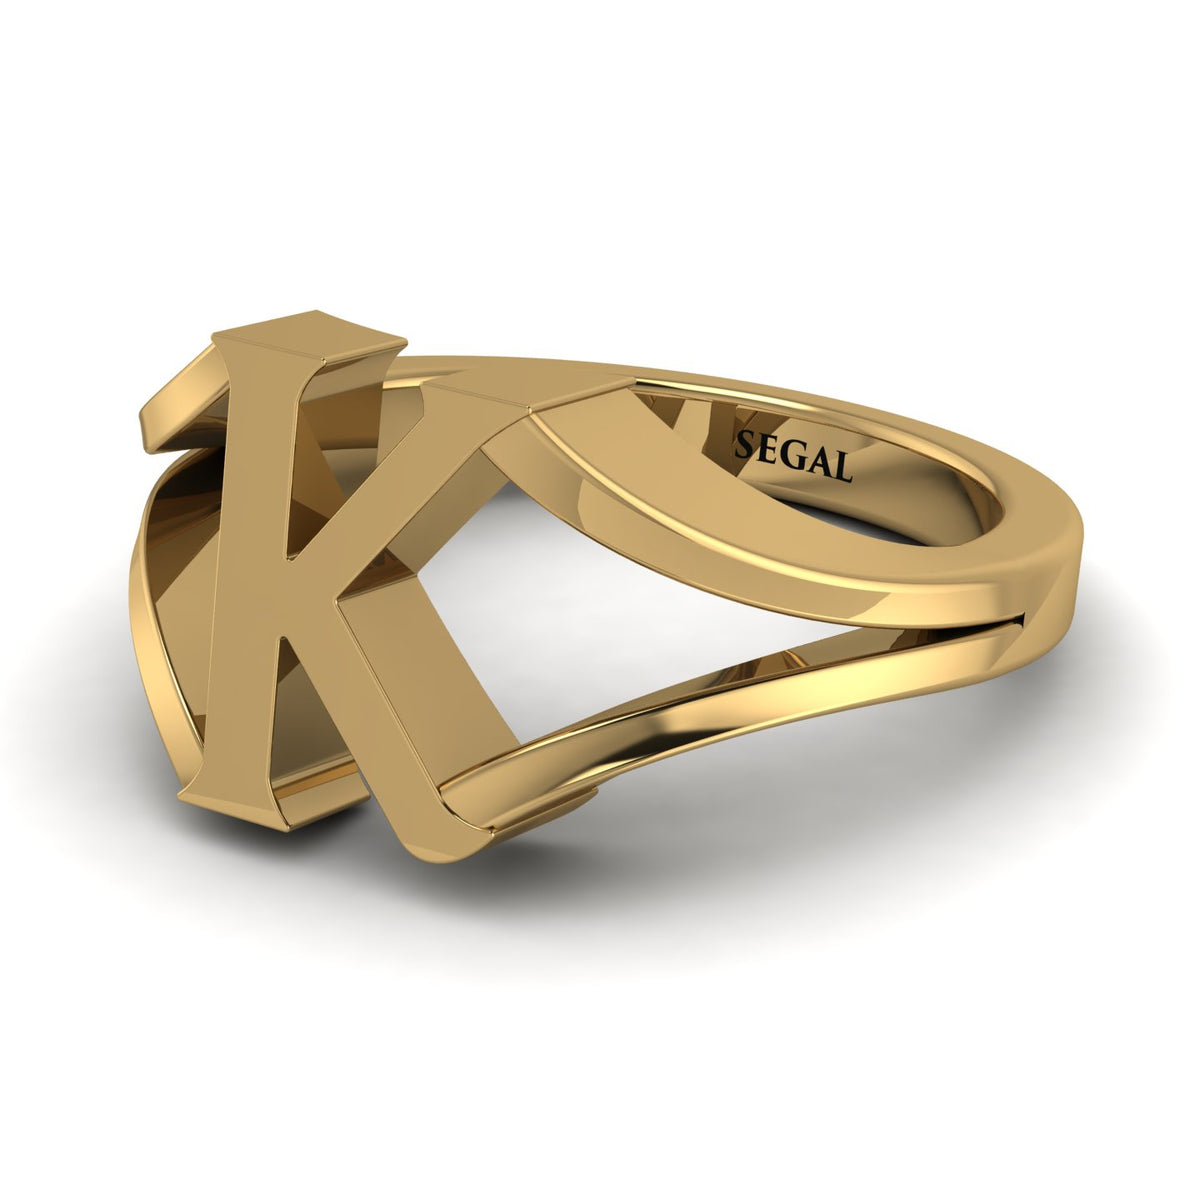 10k or 14k Gold Heart Shape Letter 'K' Initial CZ Ring Jewelry | eBay